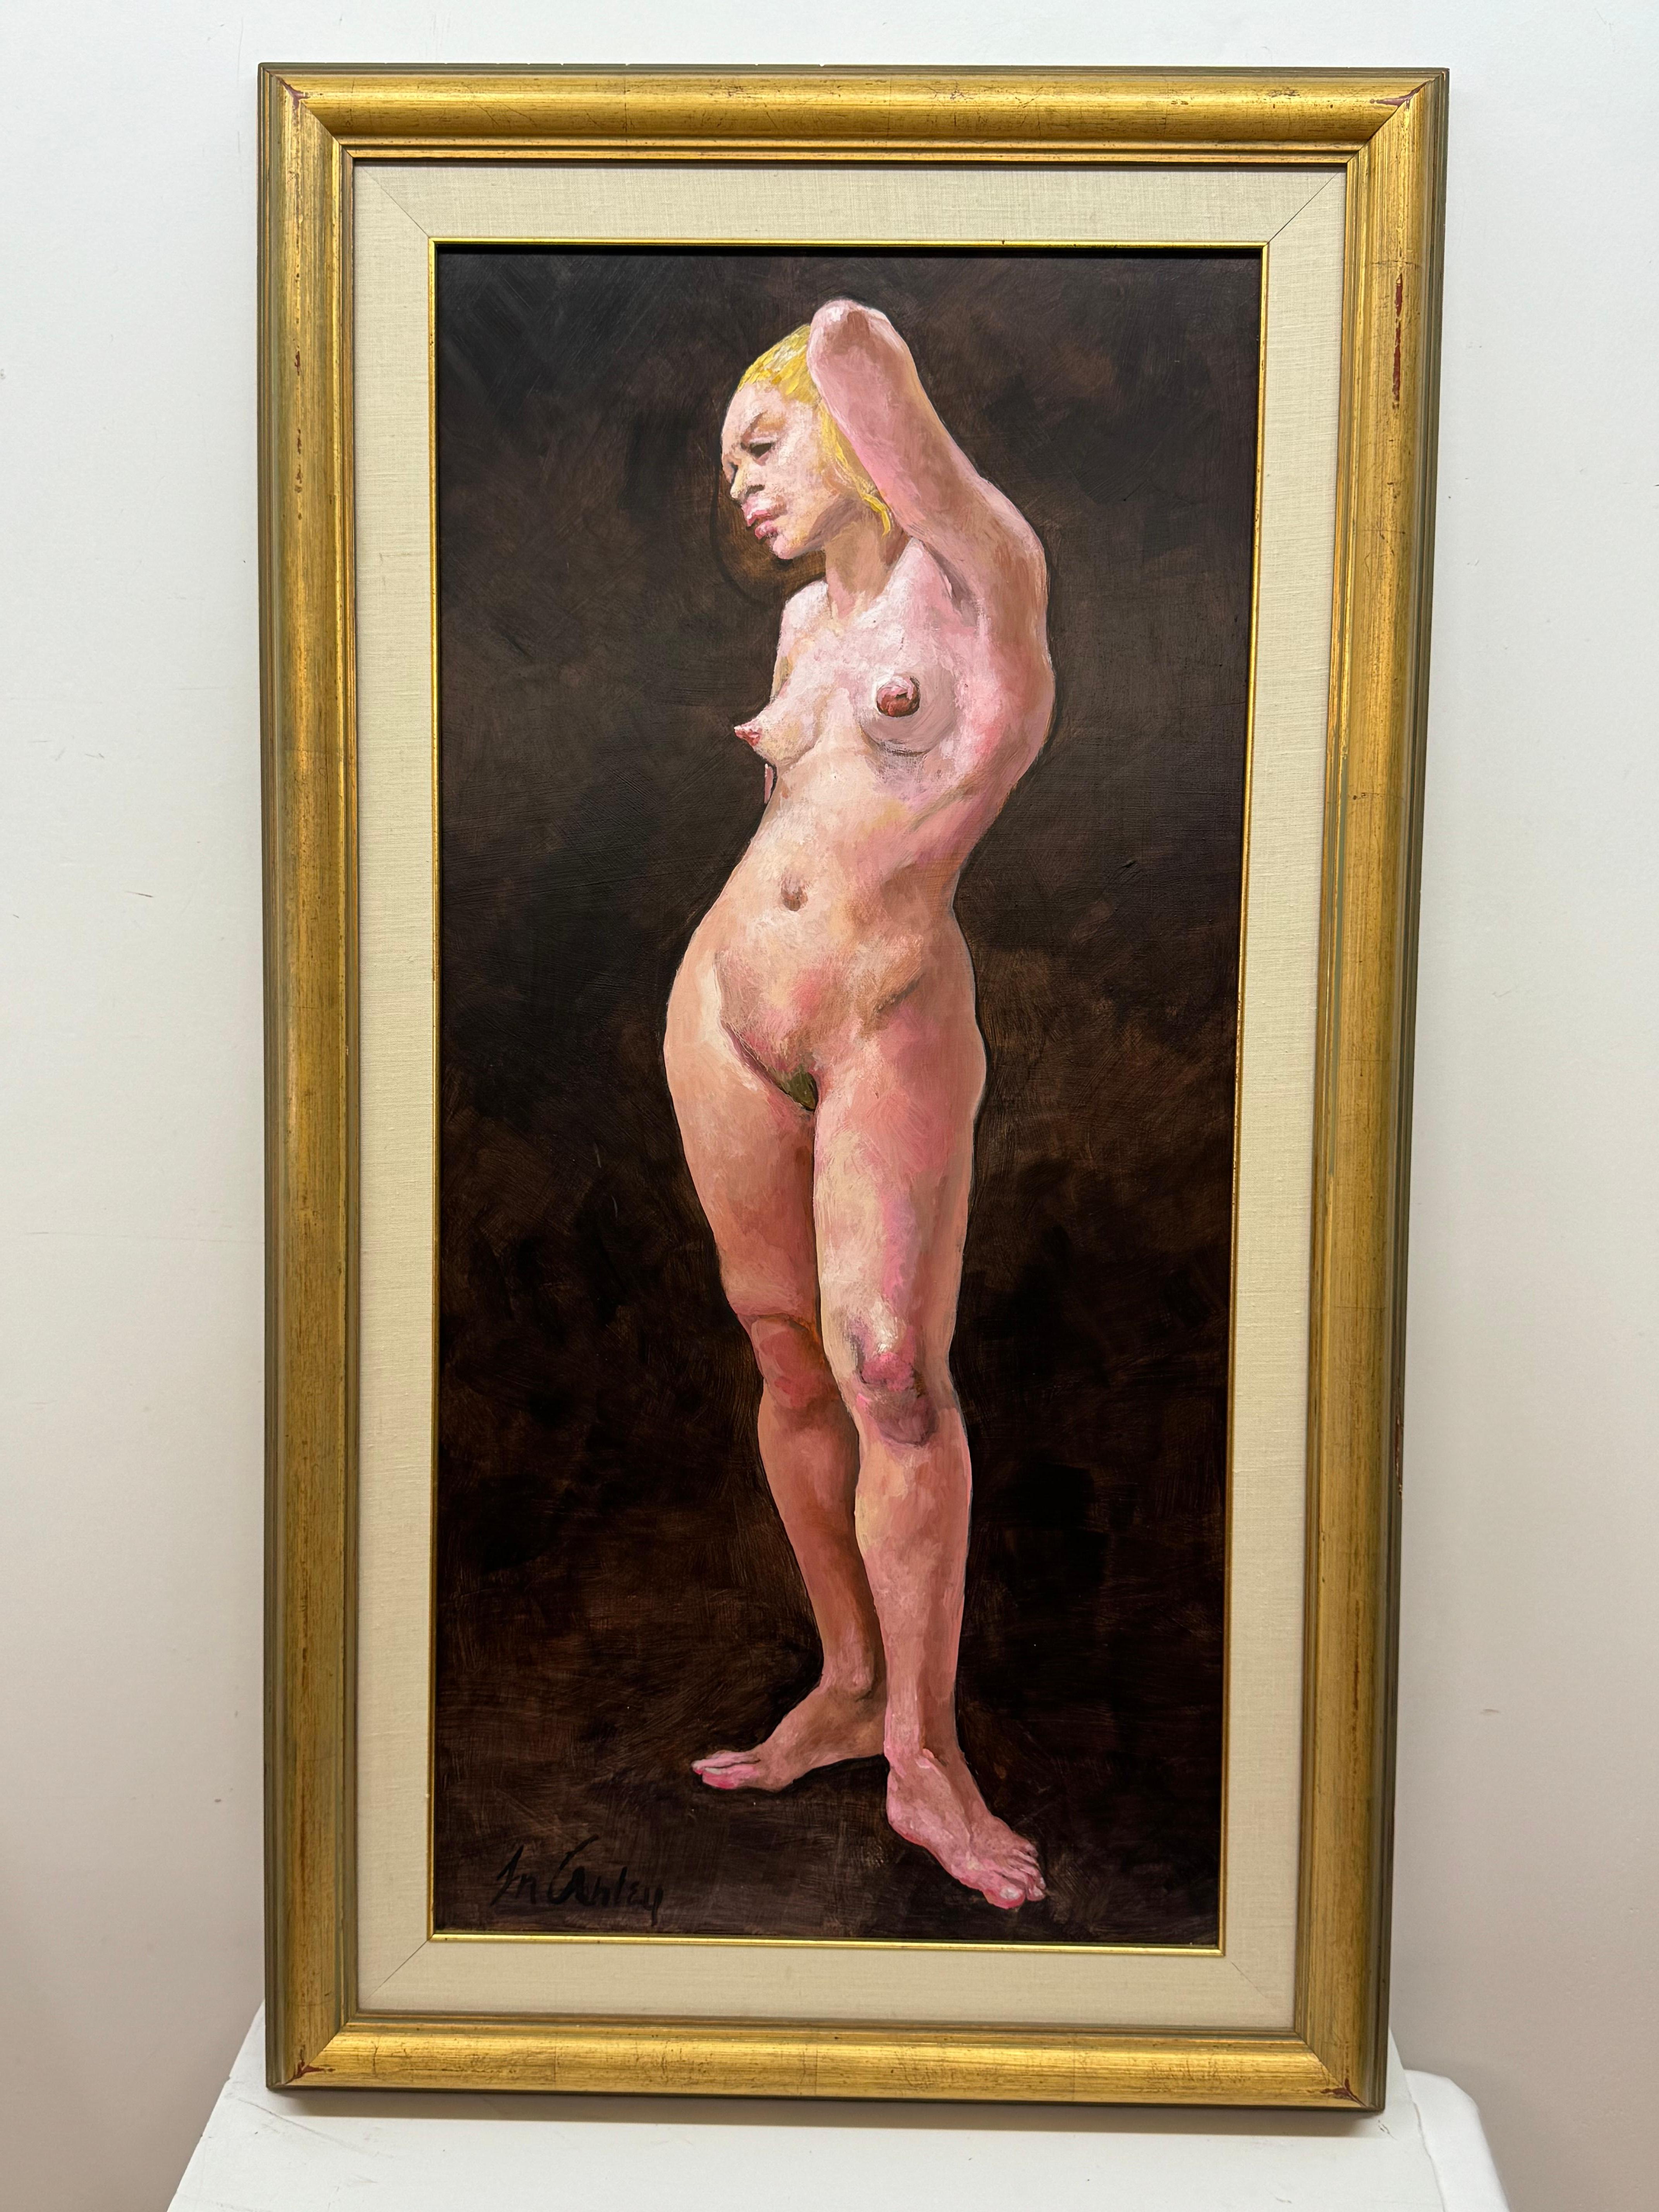 Frank N Ashley (1920-2007) "nude #2 remarkable breast" female nude portrait